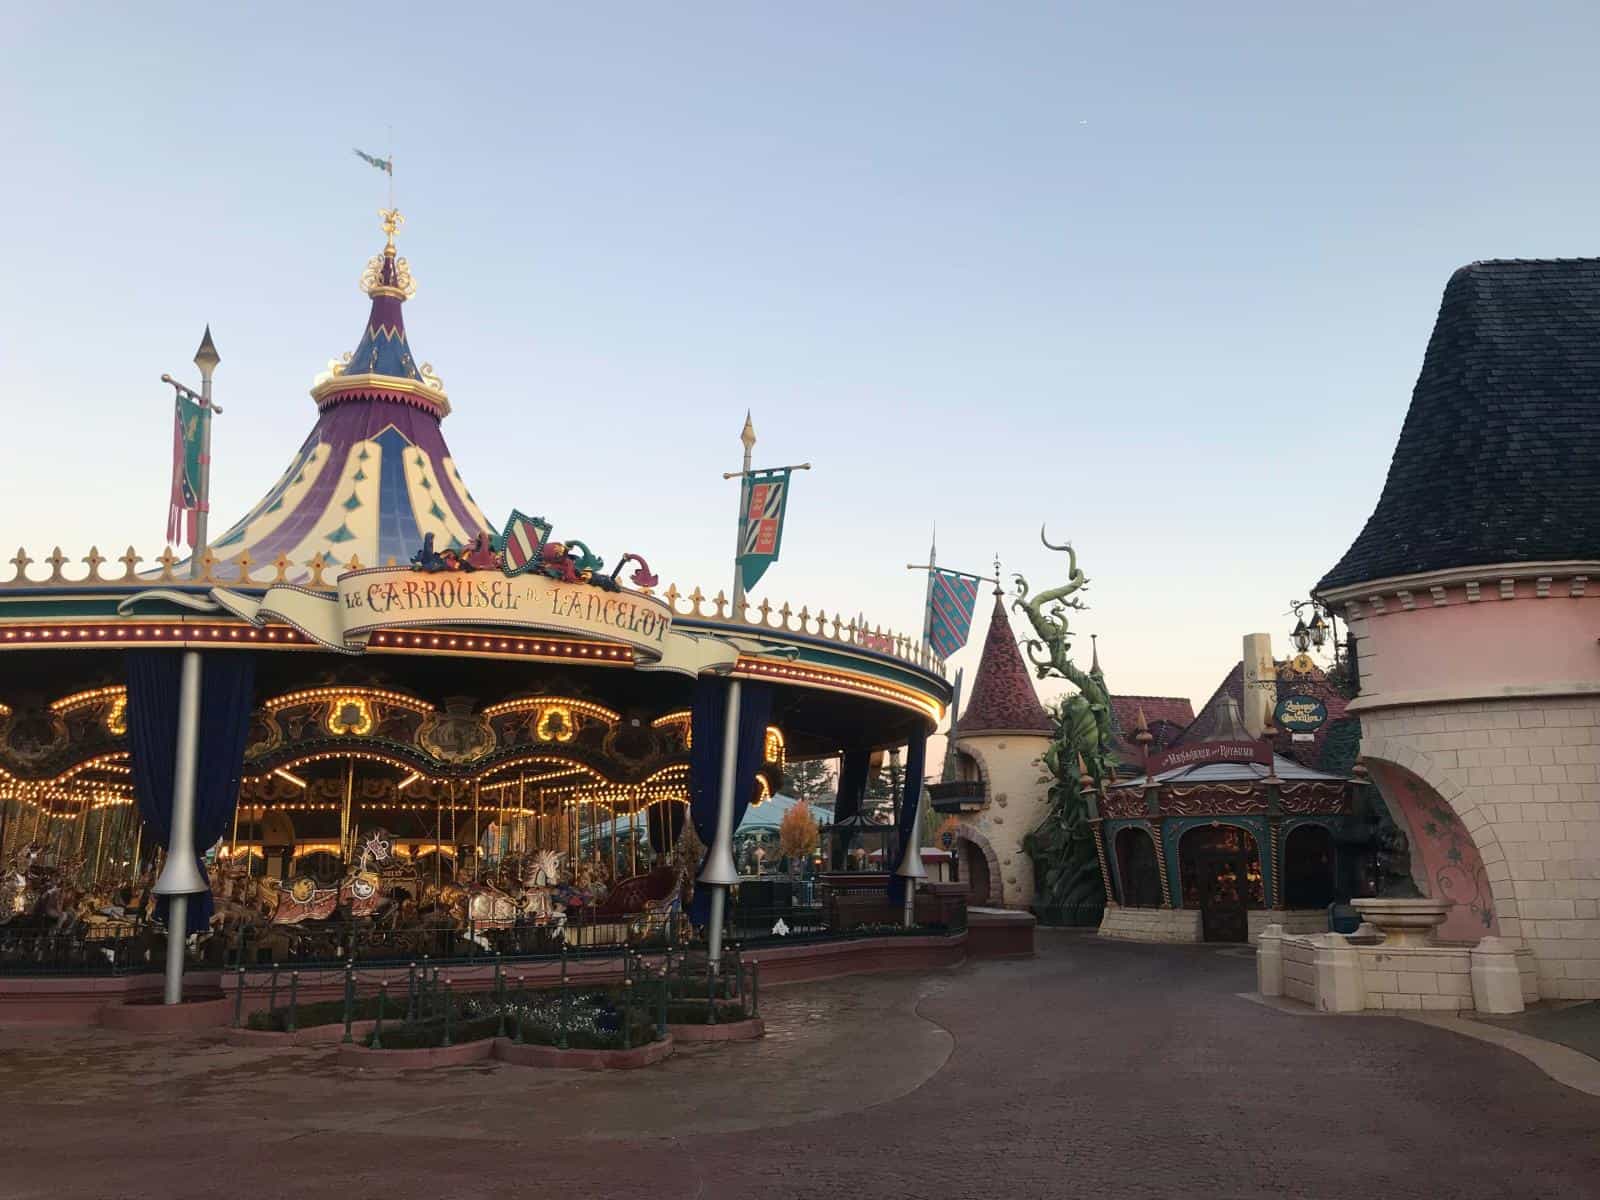 View of Fantasyland at Disneyland Paris in morning empty